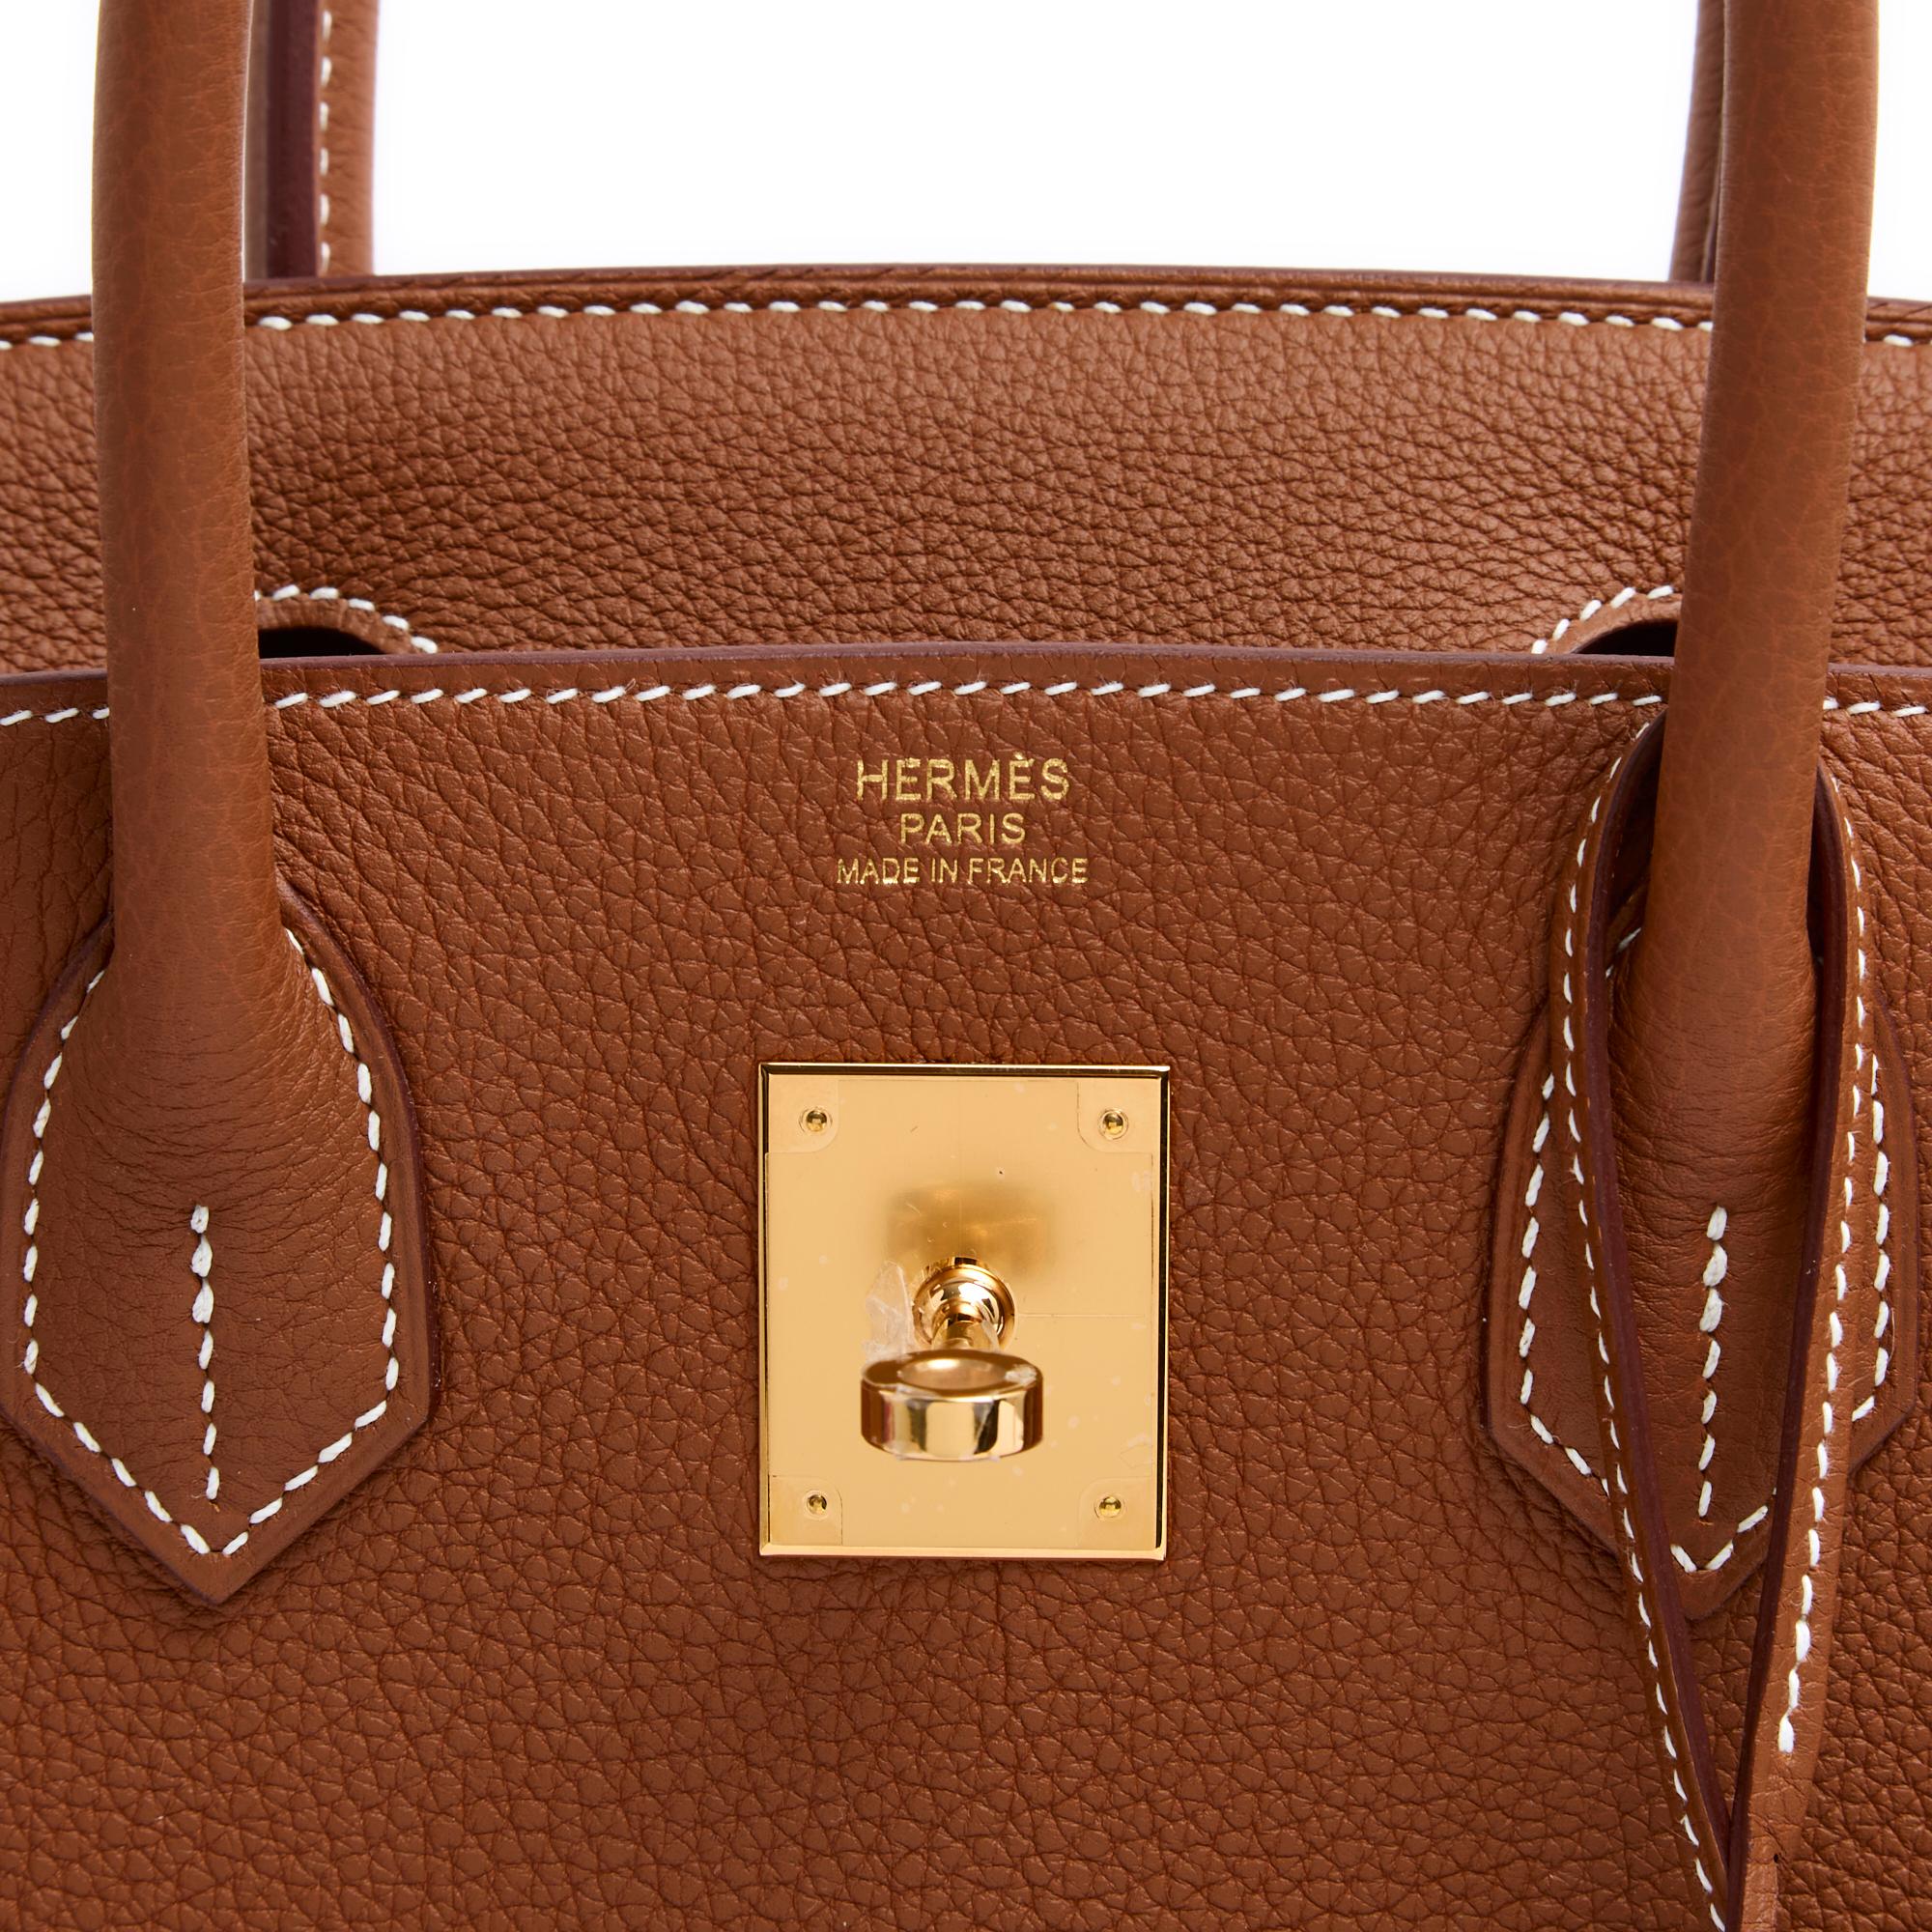 Hermes bag 2024 Birkin 30 togo gold hdw gold New in box For Sale 6